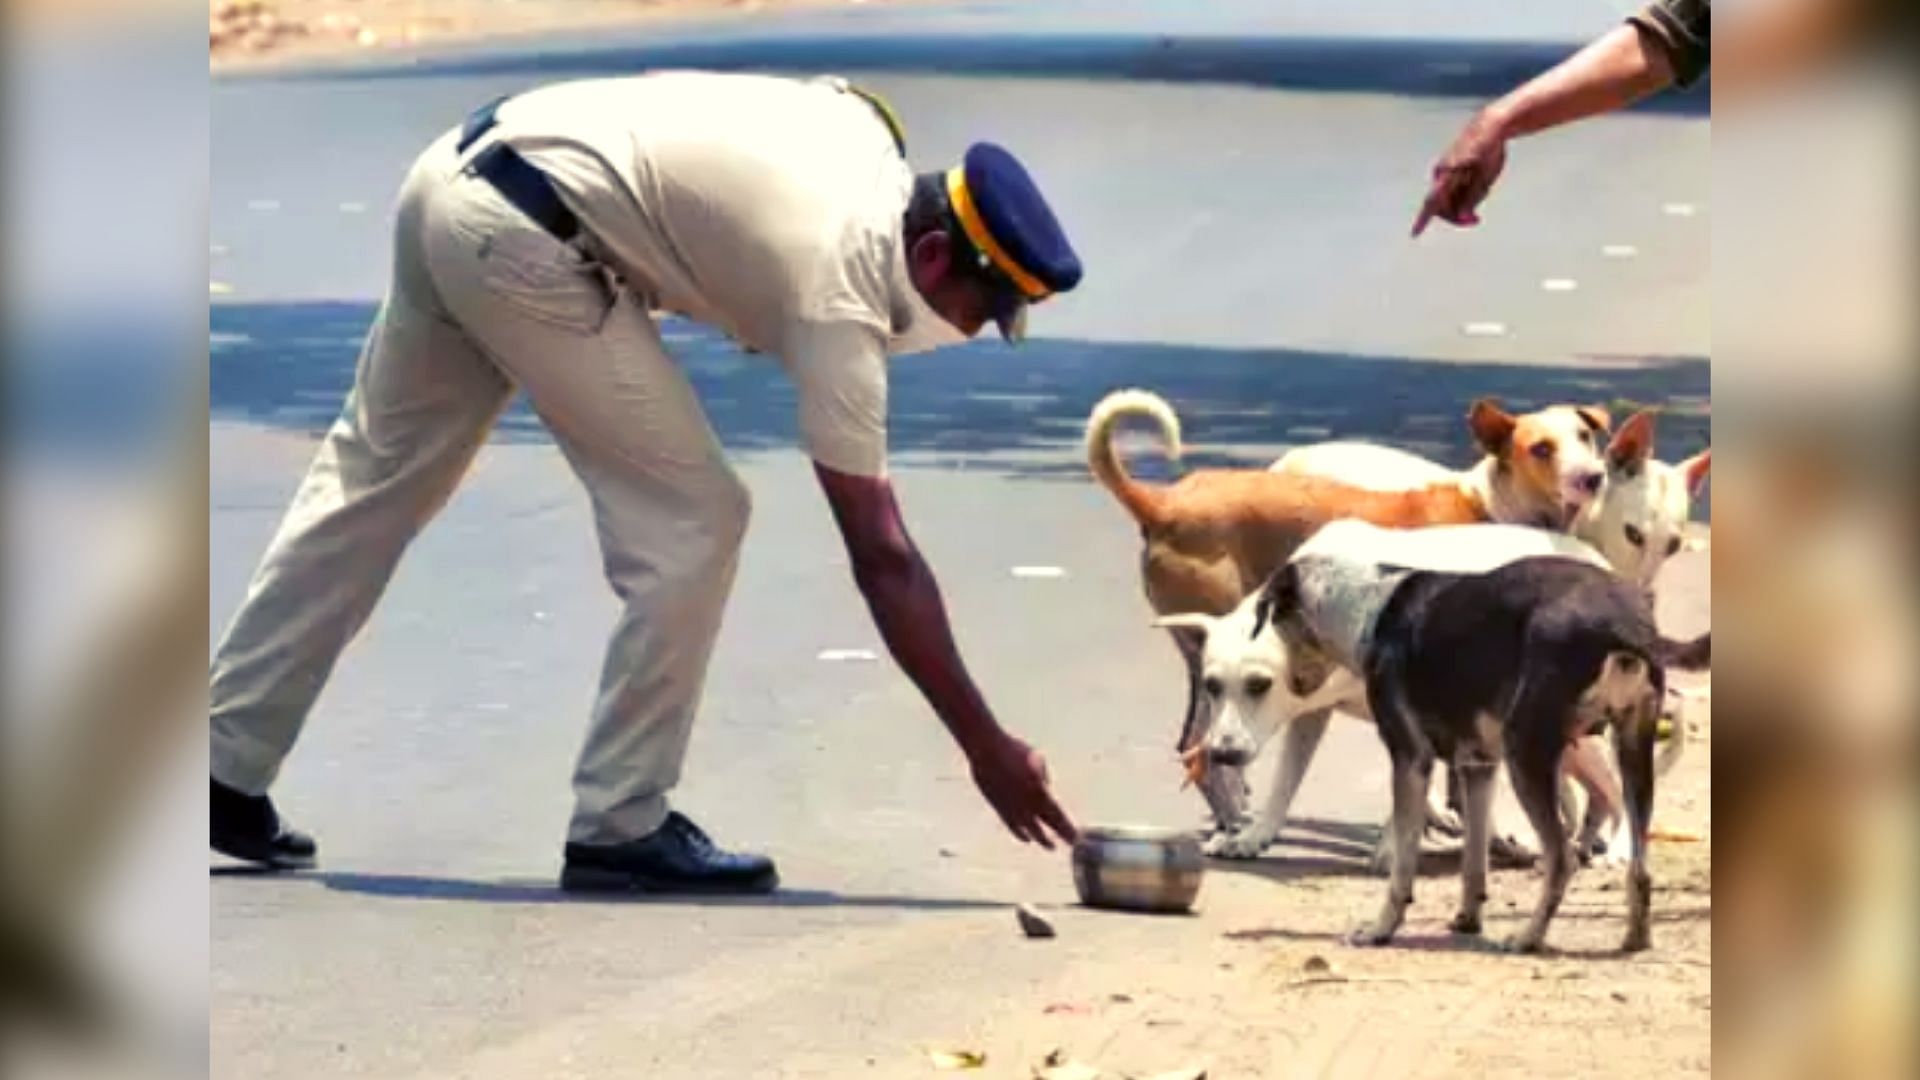 Jaipur Police feeds stray animals around the city.